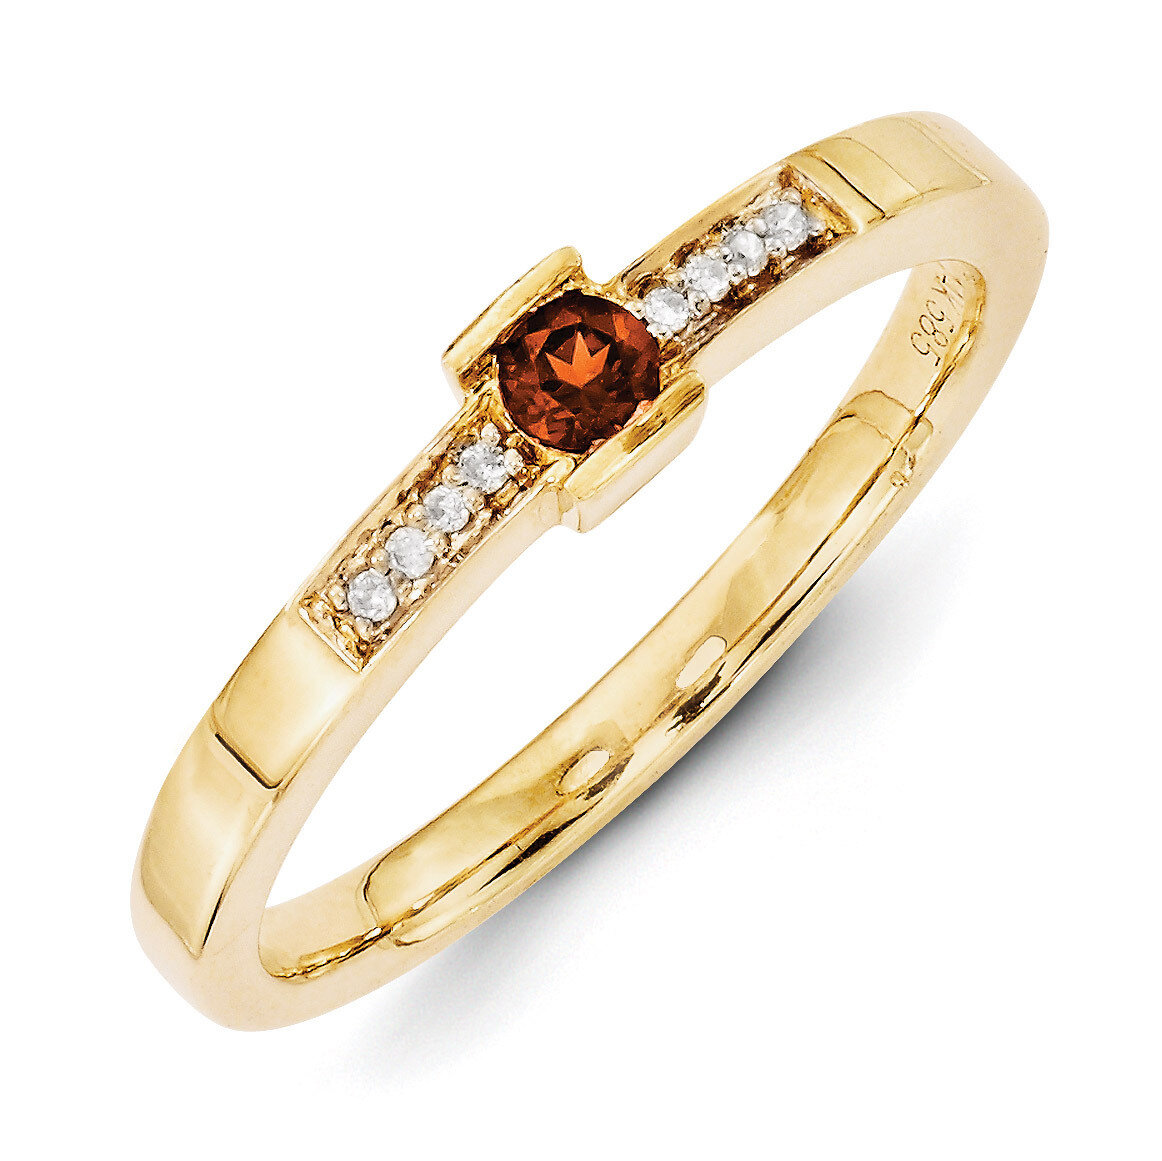 1 Birthstone Family Jewelry Diamond Semi-Set Ring 14k Yellow Gold XMR42/1